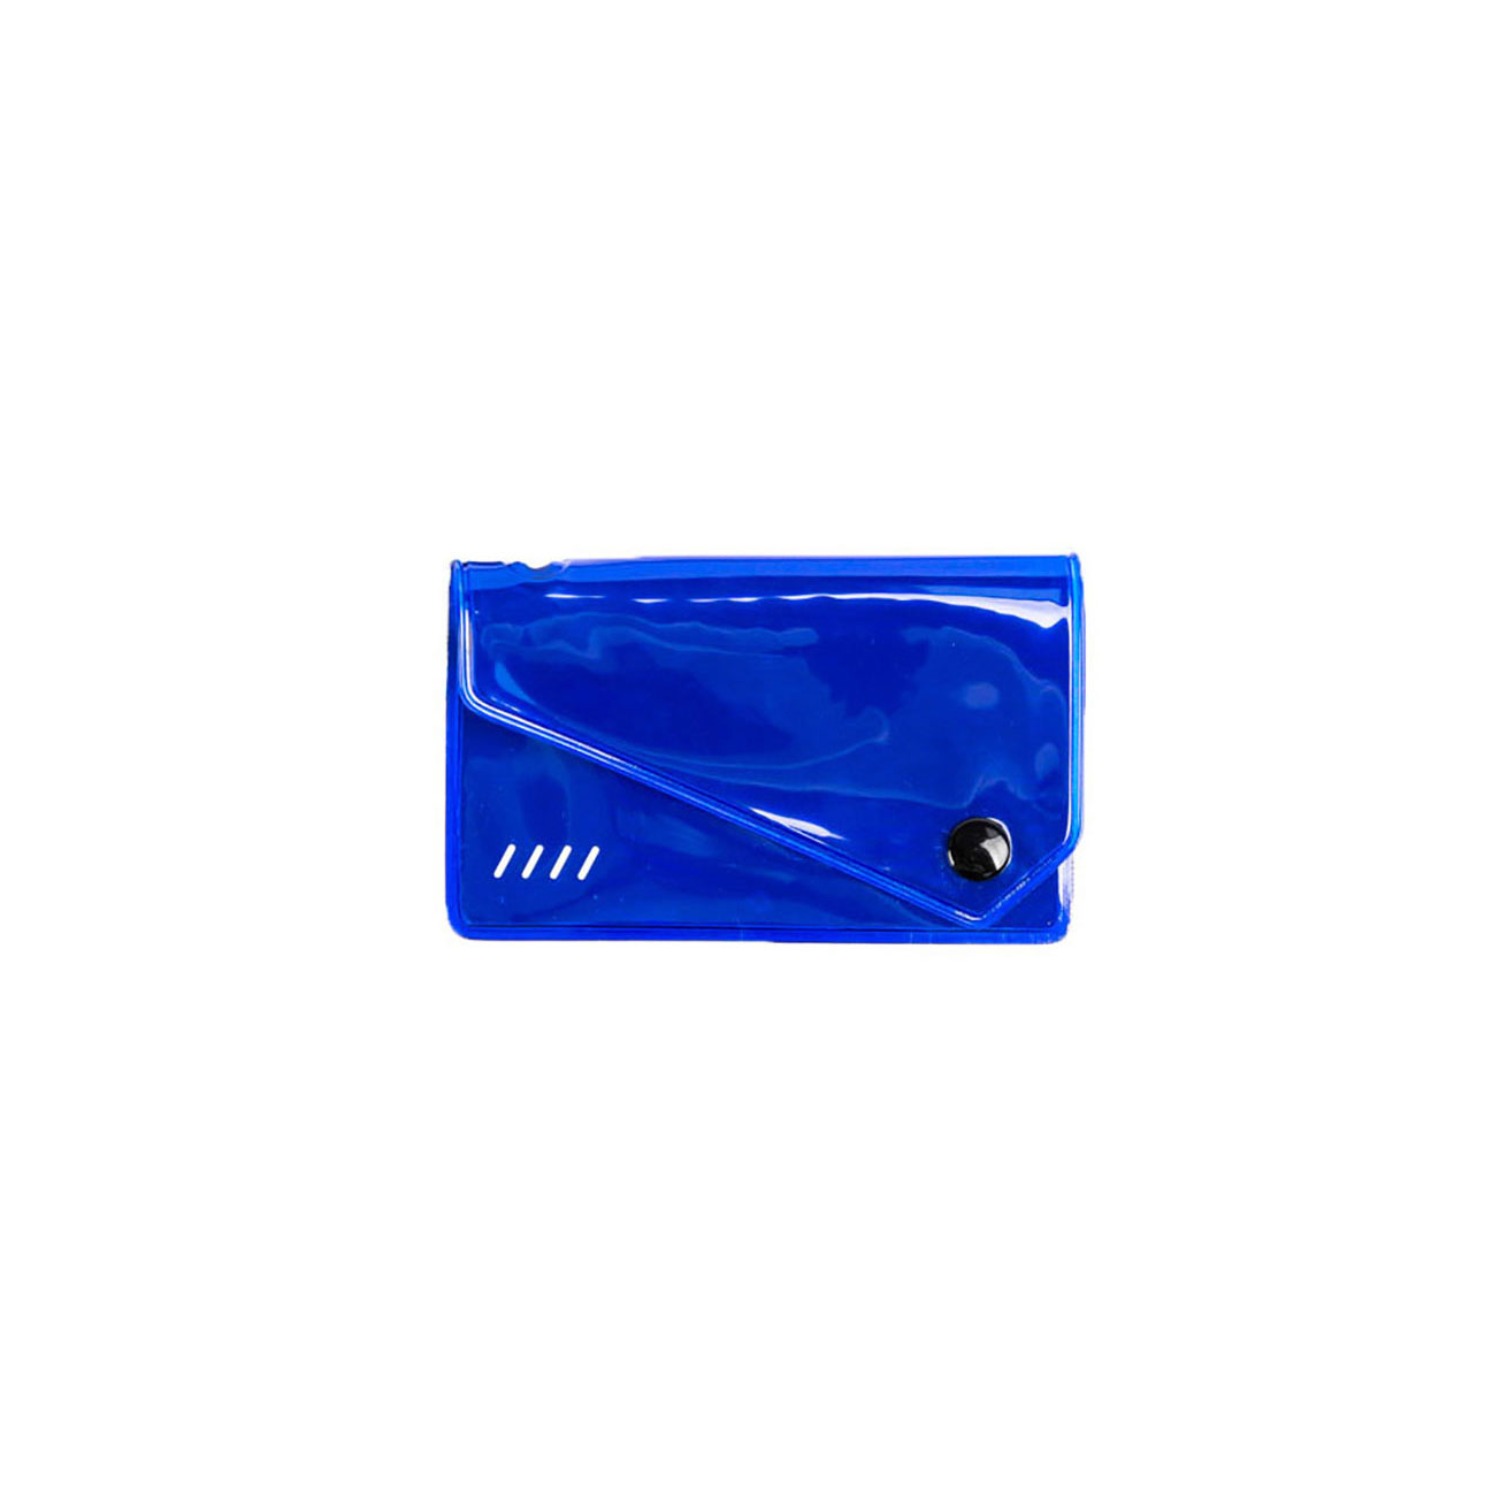 Reflector Card Holder Blue